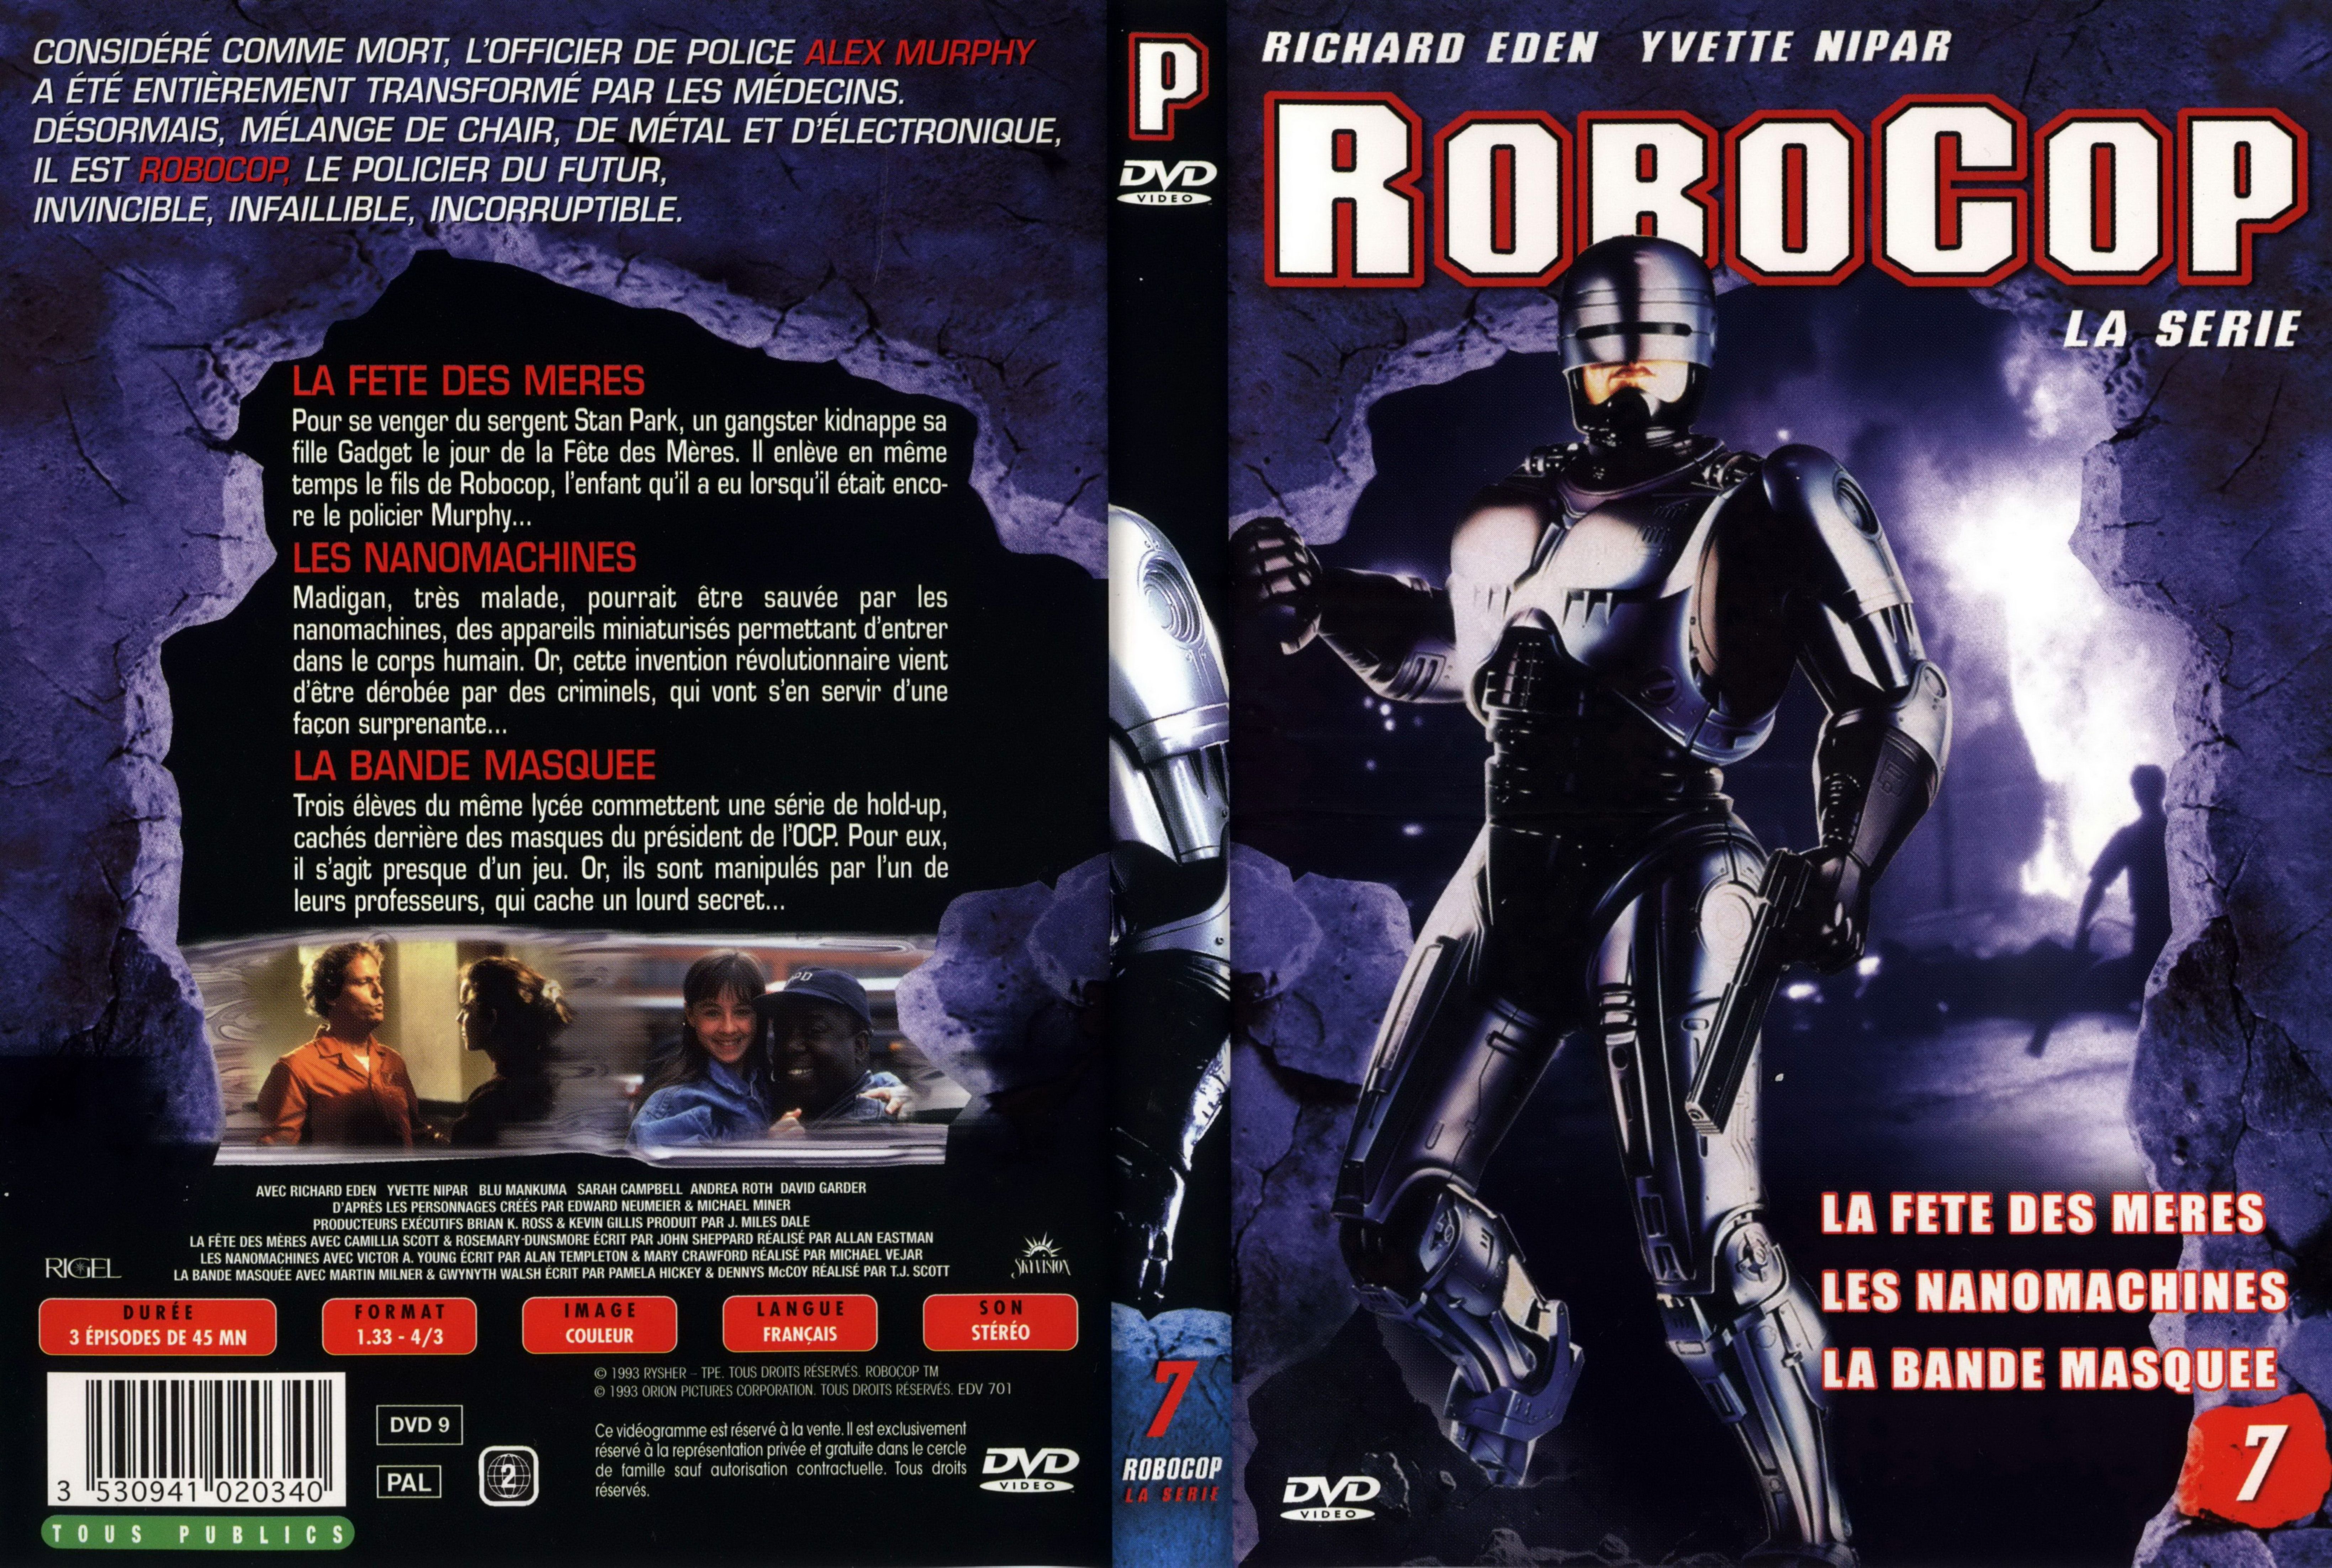 Jaquette DVD Robocop la srie vol 7